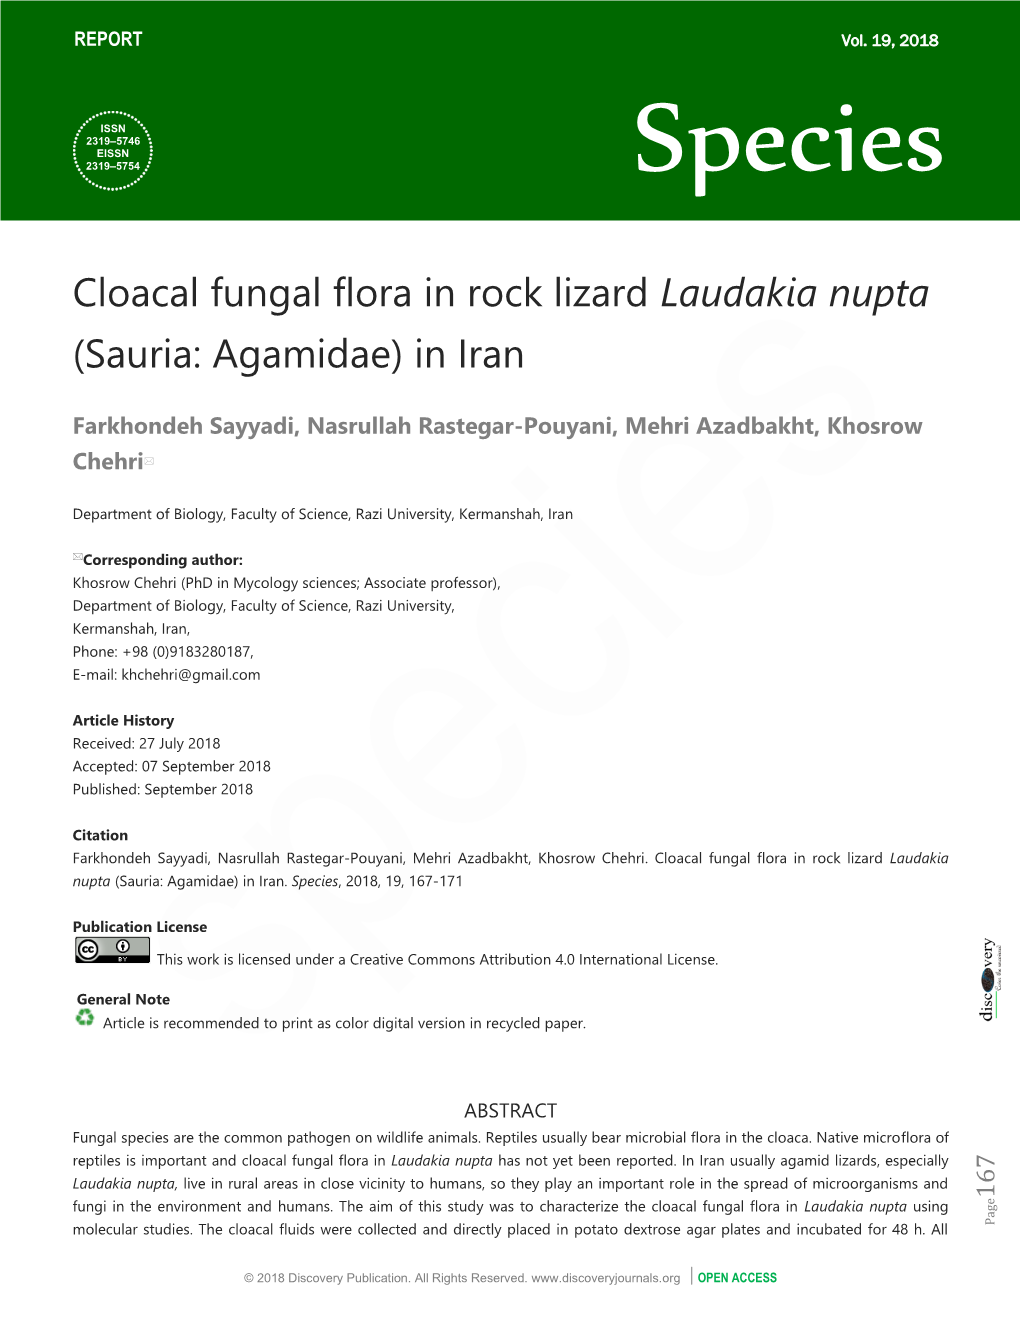 Cloacal Fungal Flora in Rock Lizard Laudakia Nupta (Sauria: Agamidae) in Iran